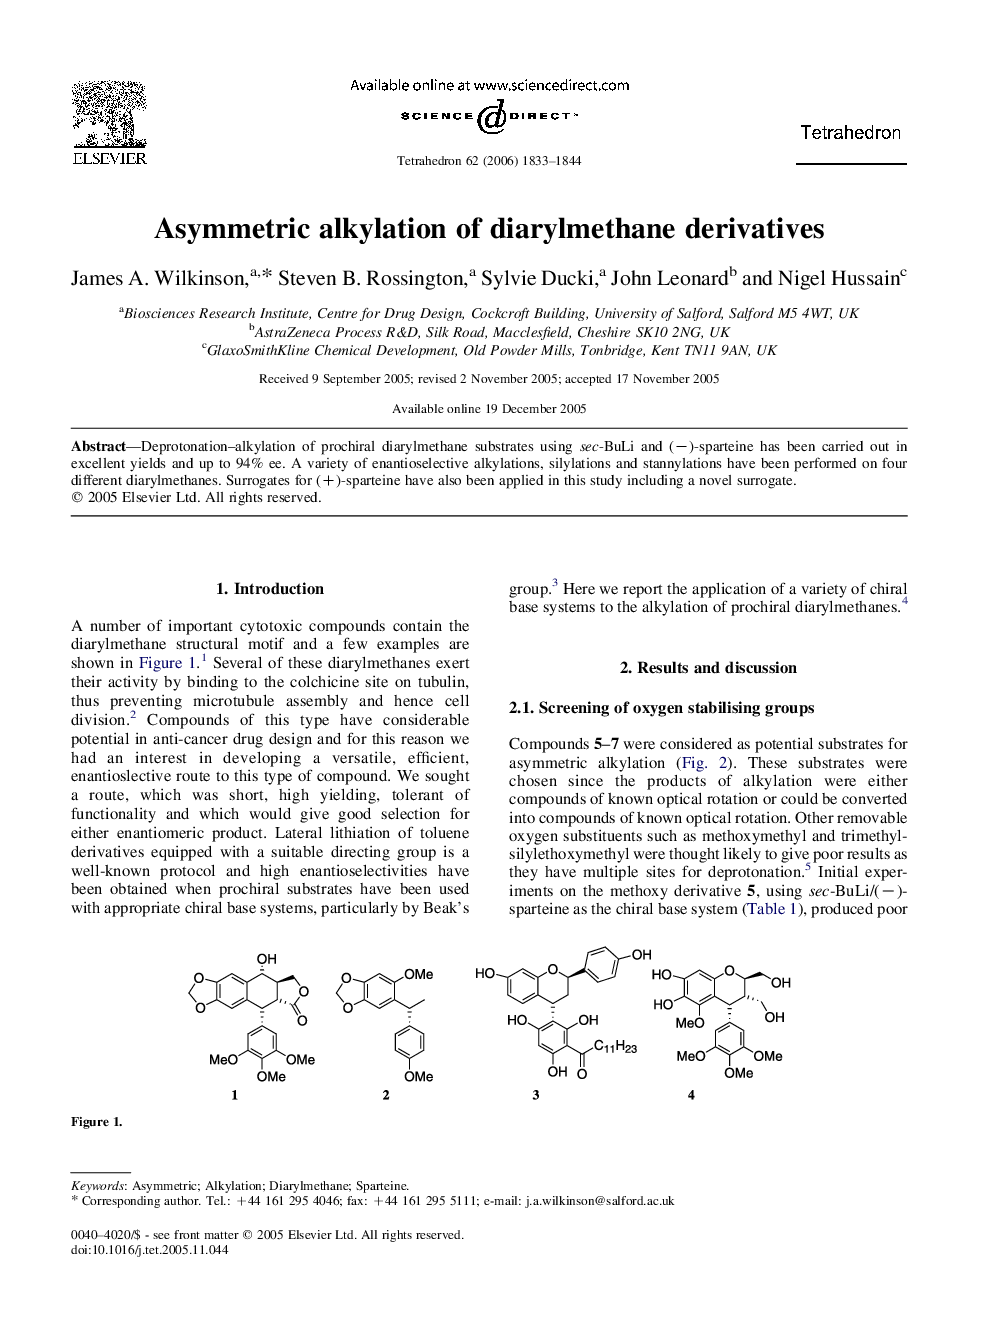 Asymmetric alkylation of diarylmethane derivatives